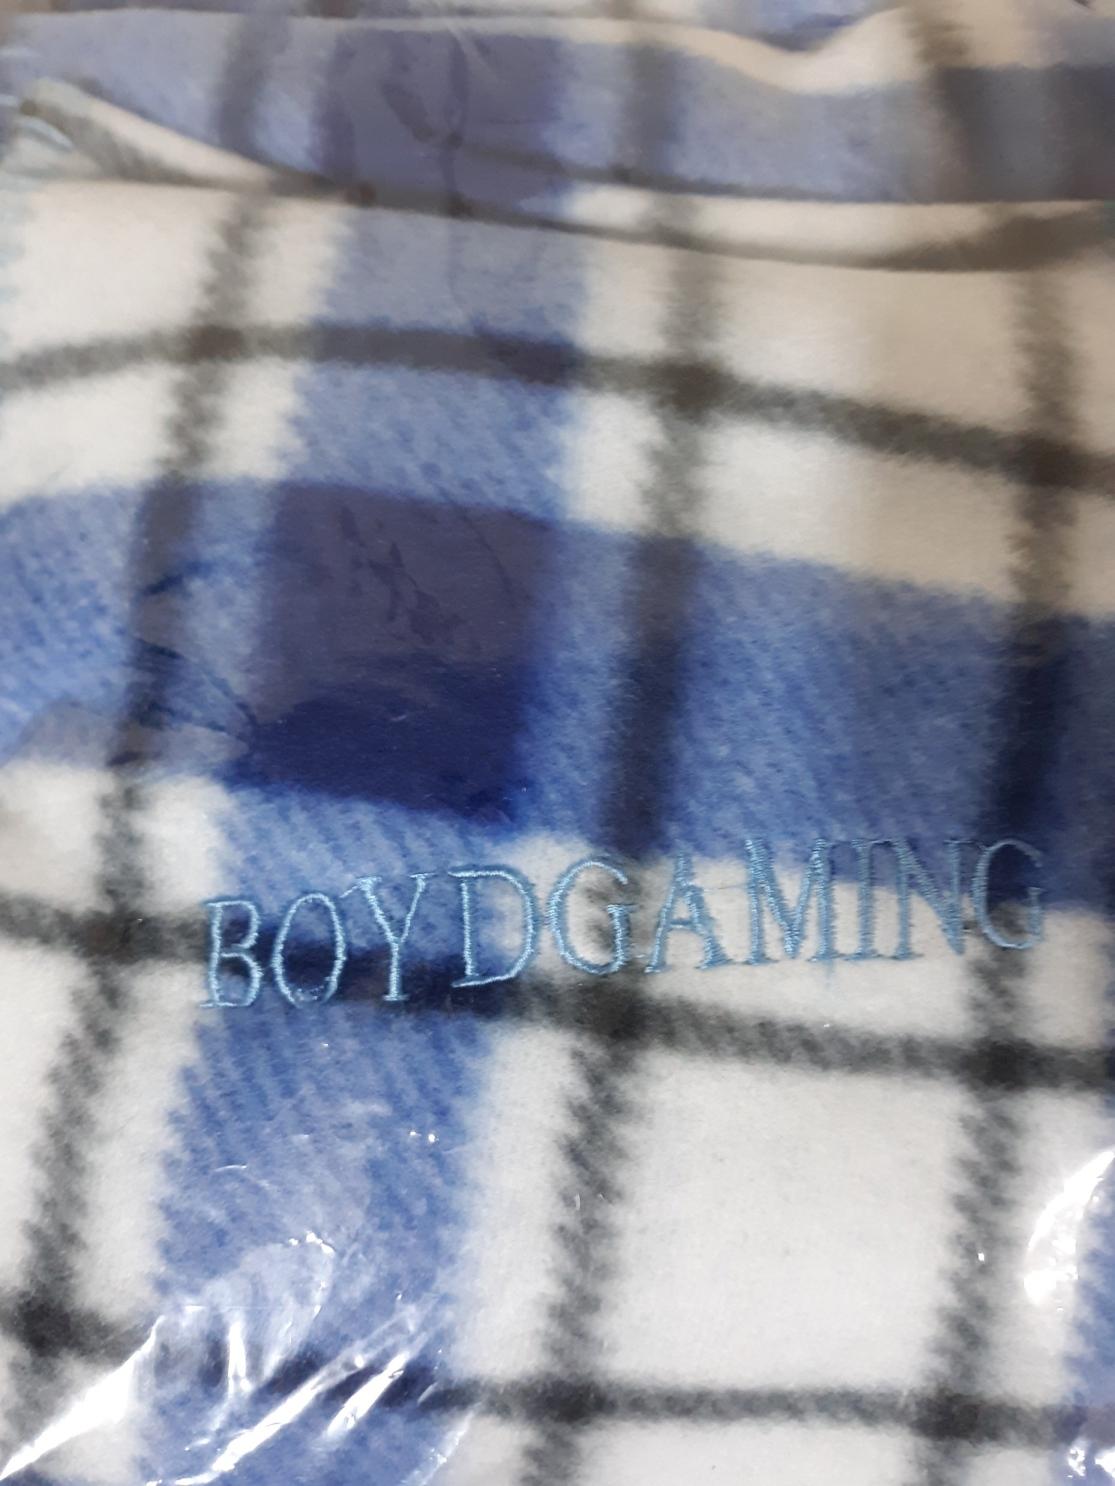 Blanket From Boyd Gaming, Casio